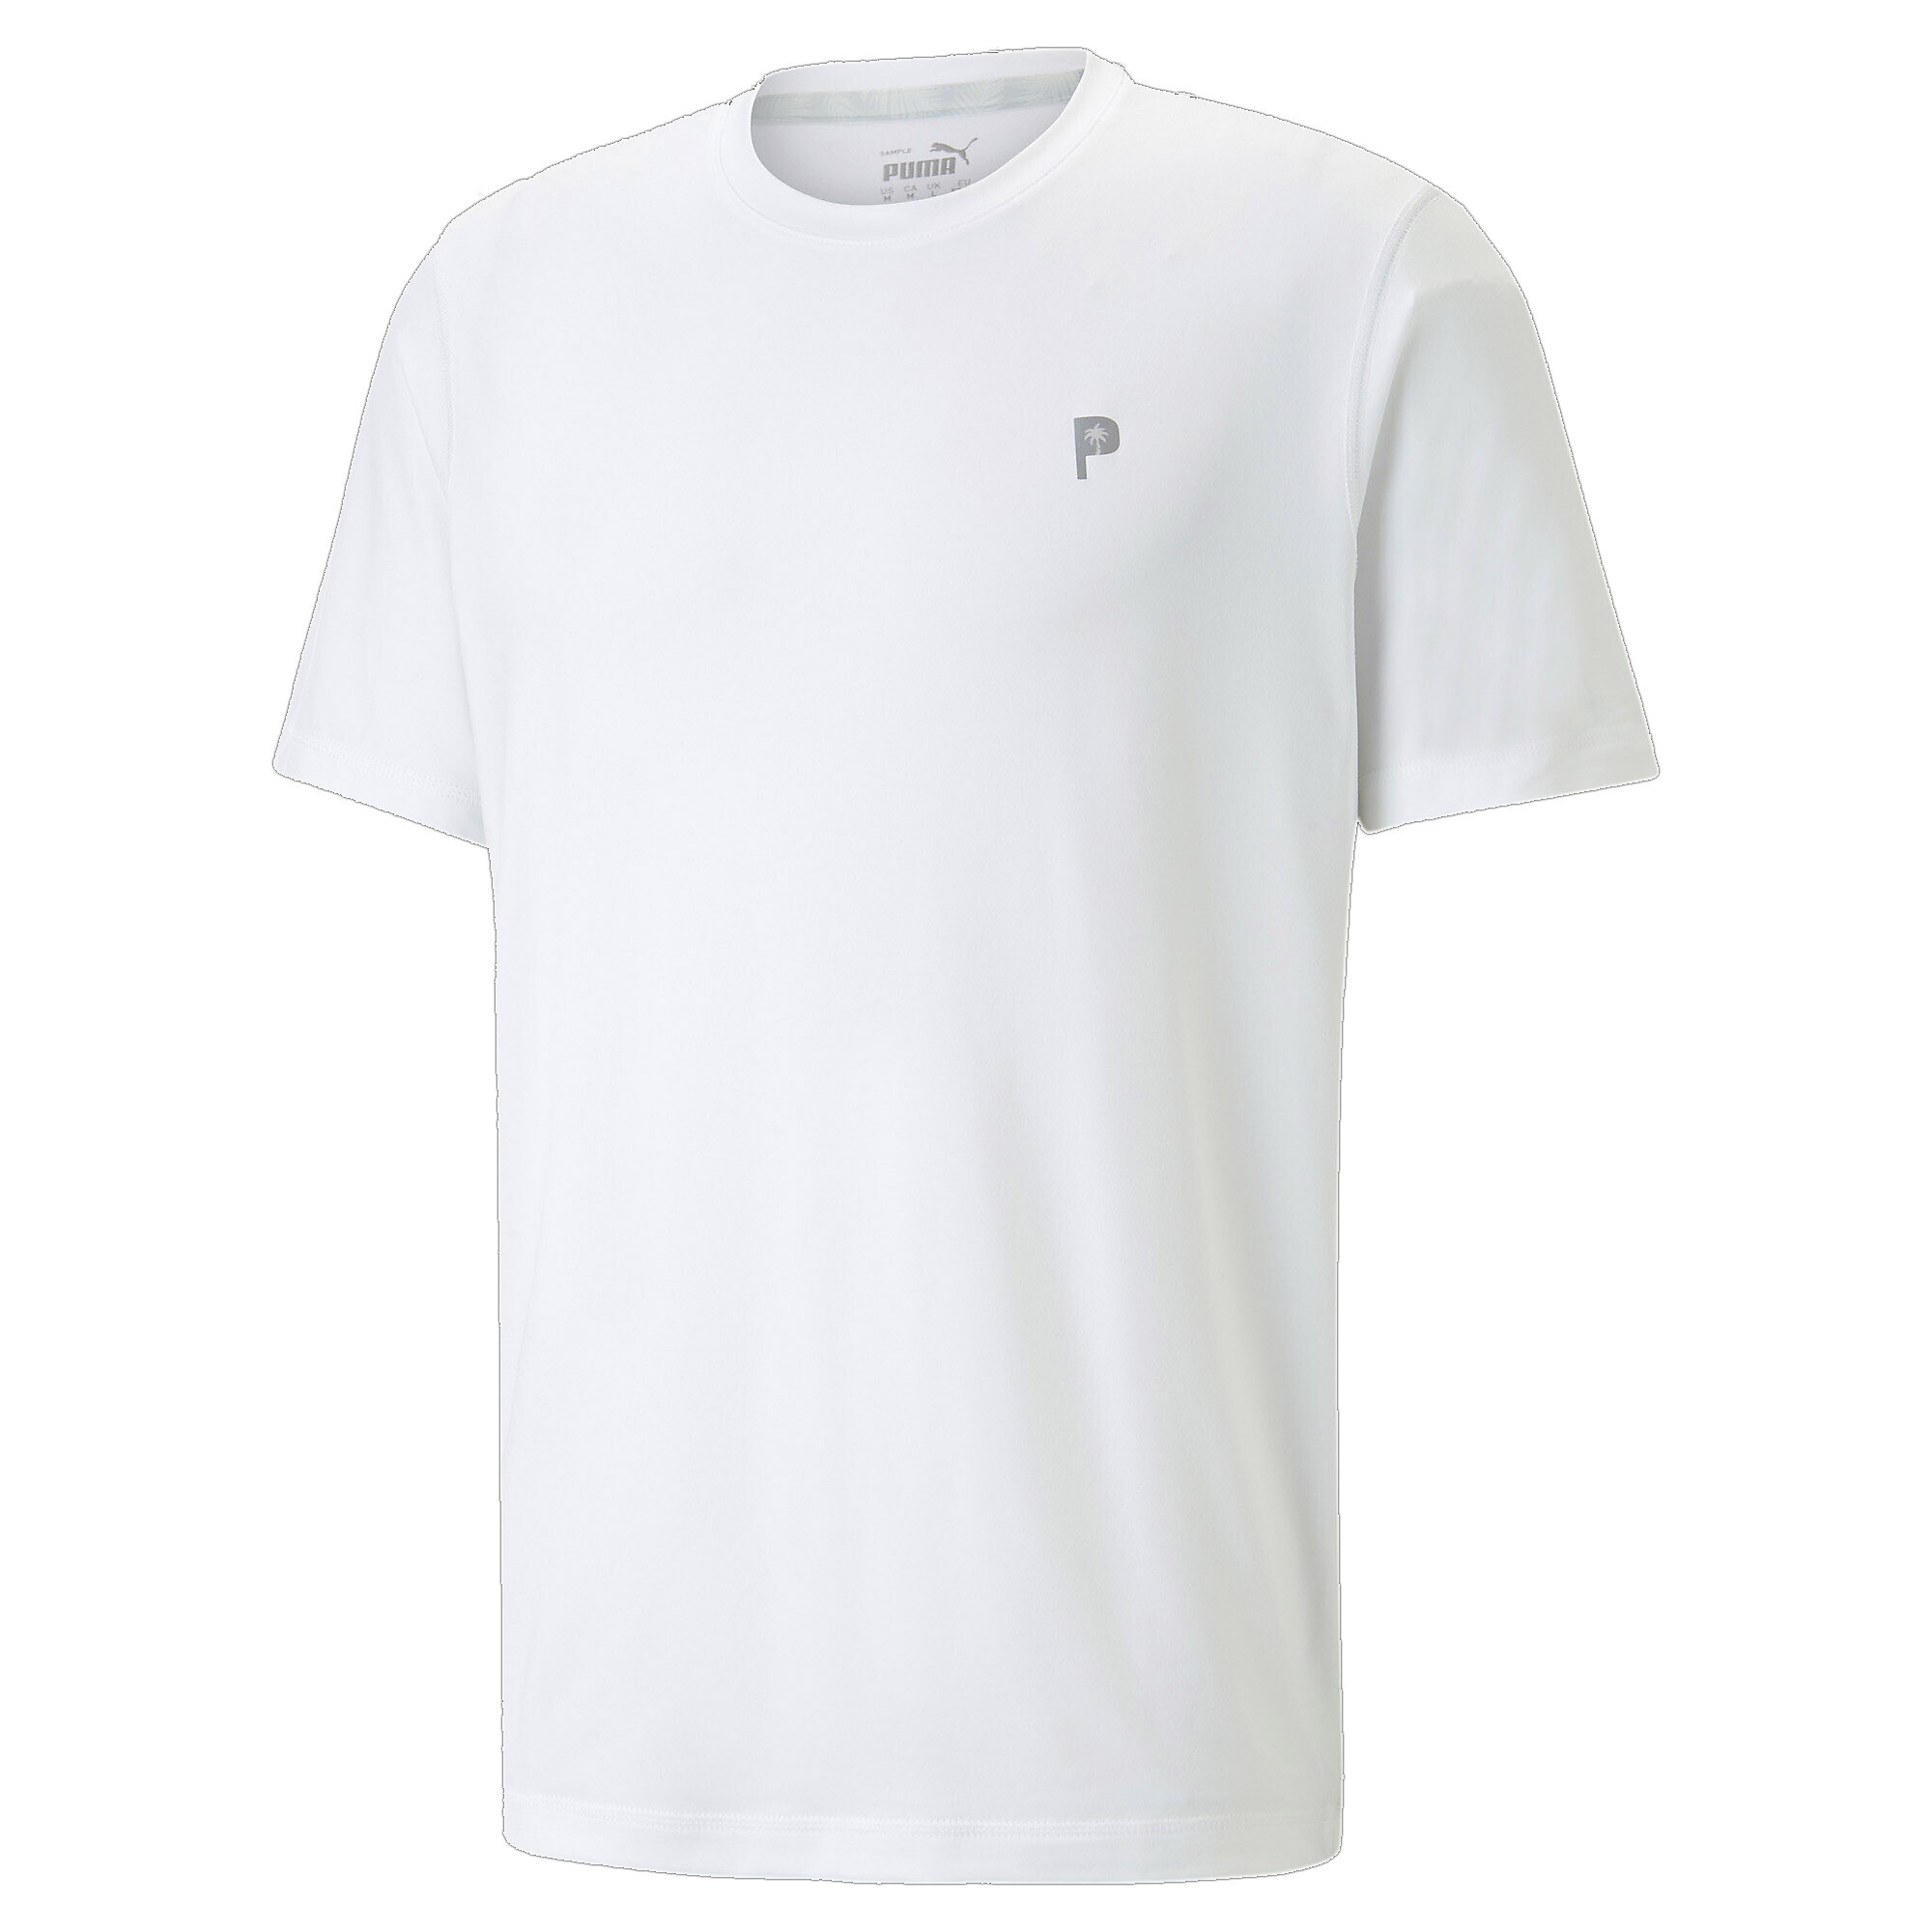 30%OFF！＜プーマ公式通販＞ プーマ メンズ ゴルフ PUMA x PTC 半袖 Tシャツ メンズ Bright White ｜PUMA.com